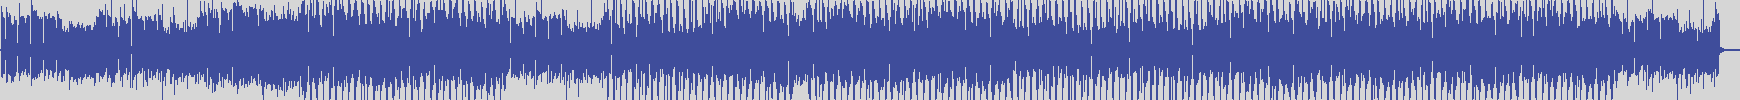 noclouds_chillout [NOC144] Warm Incline - Orange Sky [Markus Wassenberg's Ice Mix] audio wave form